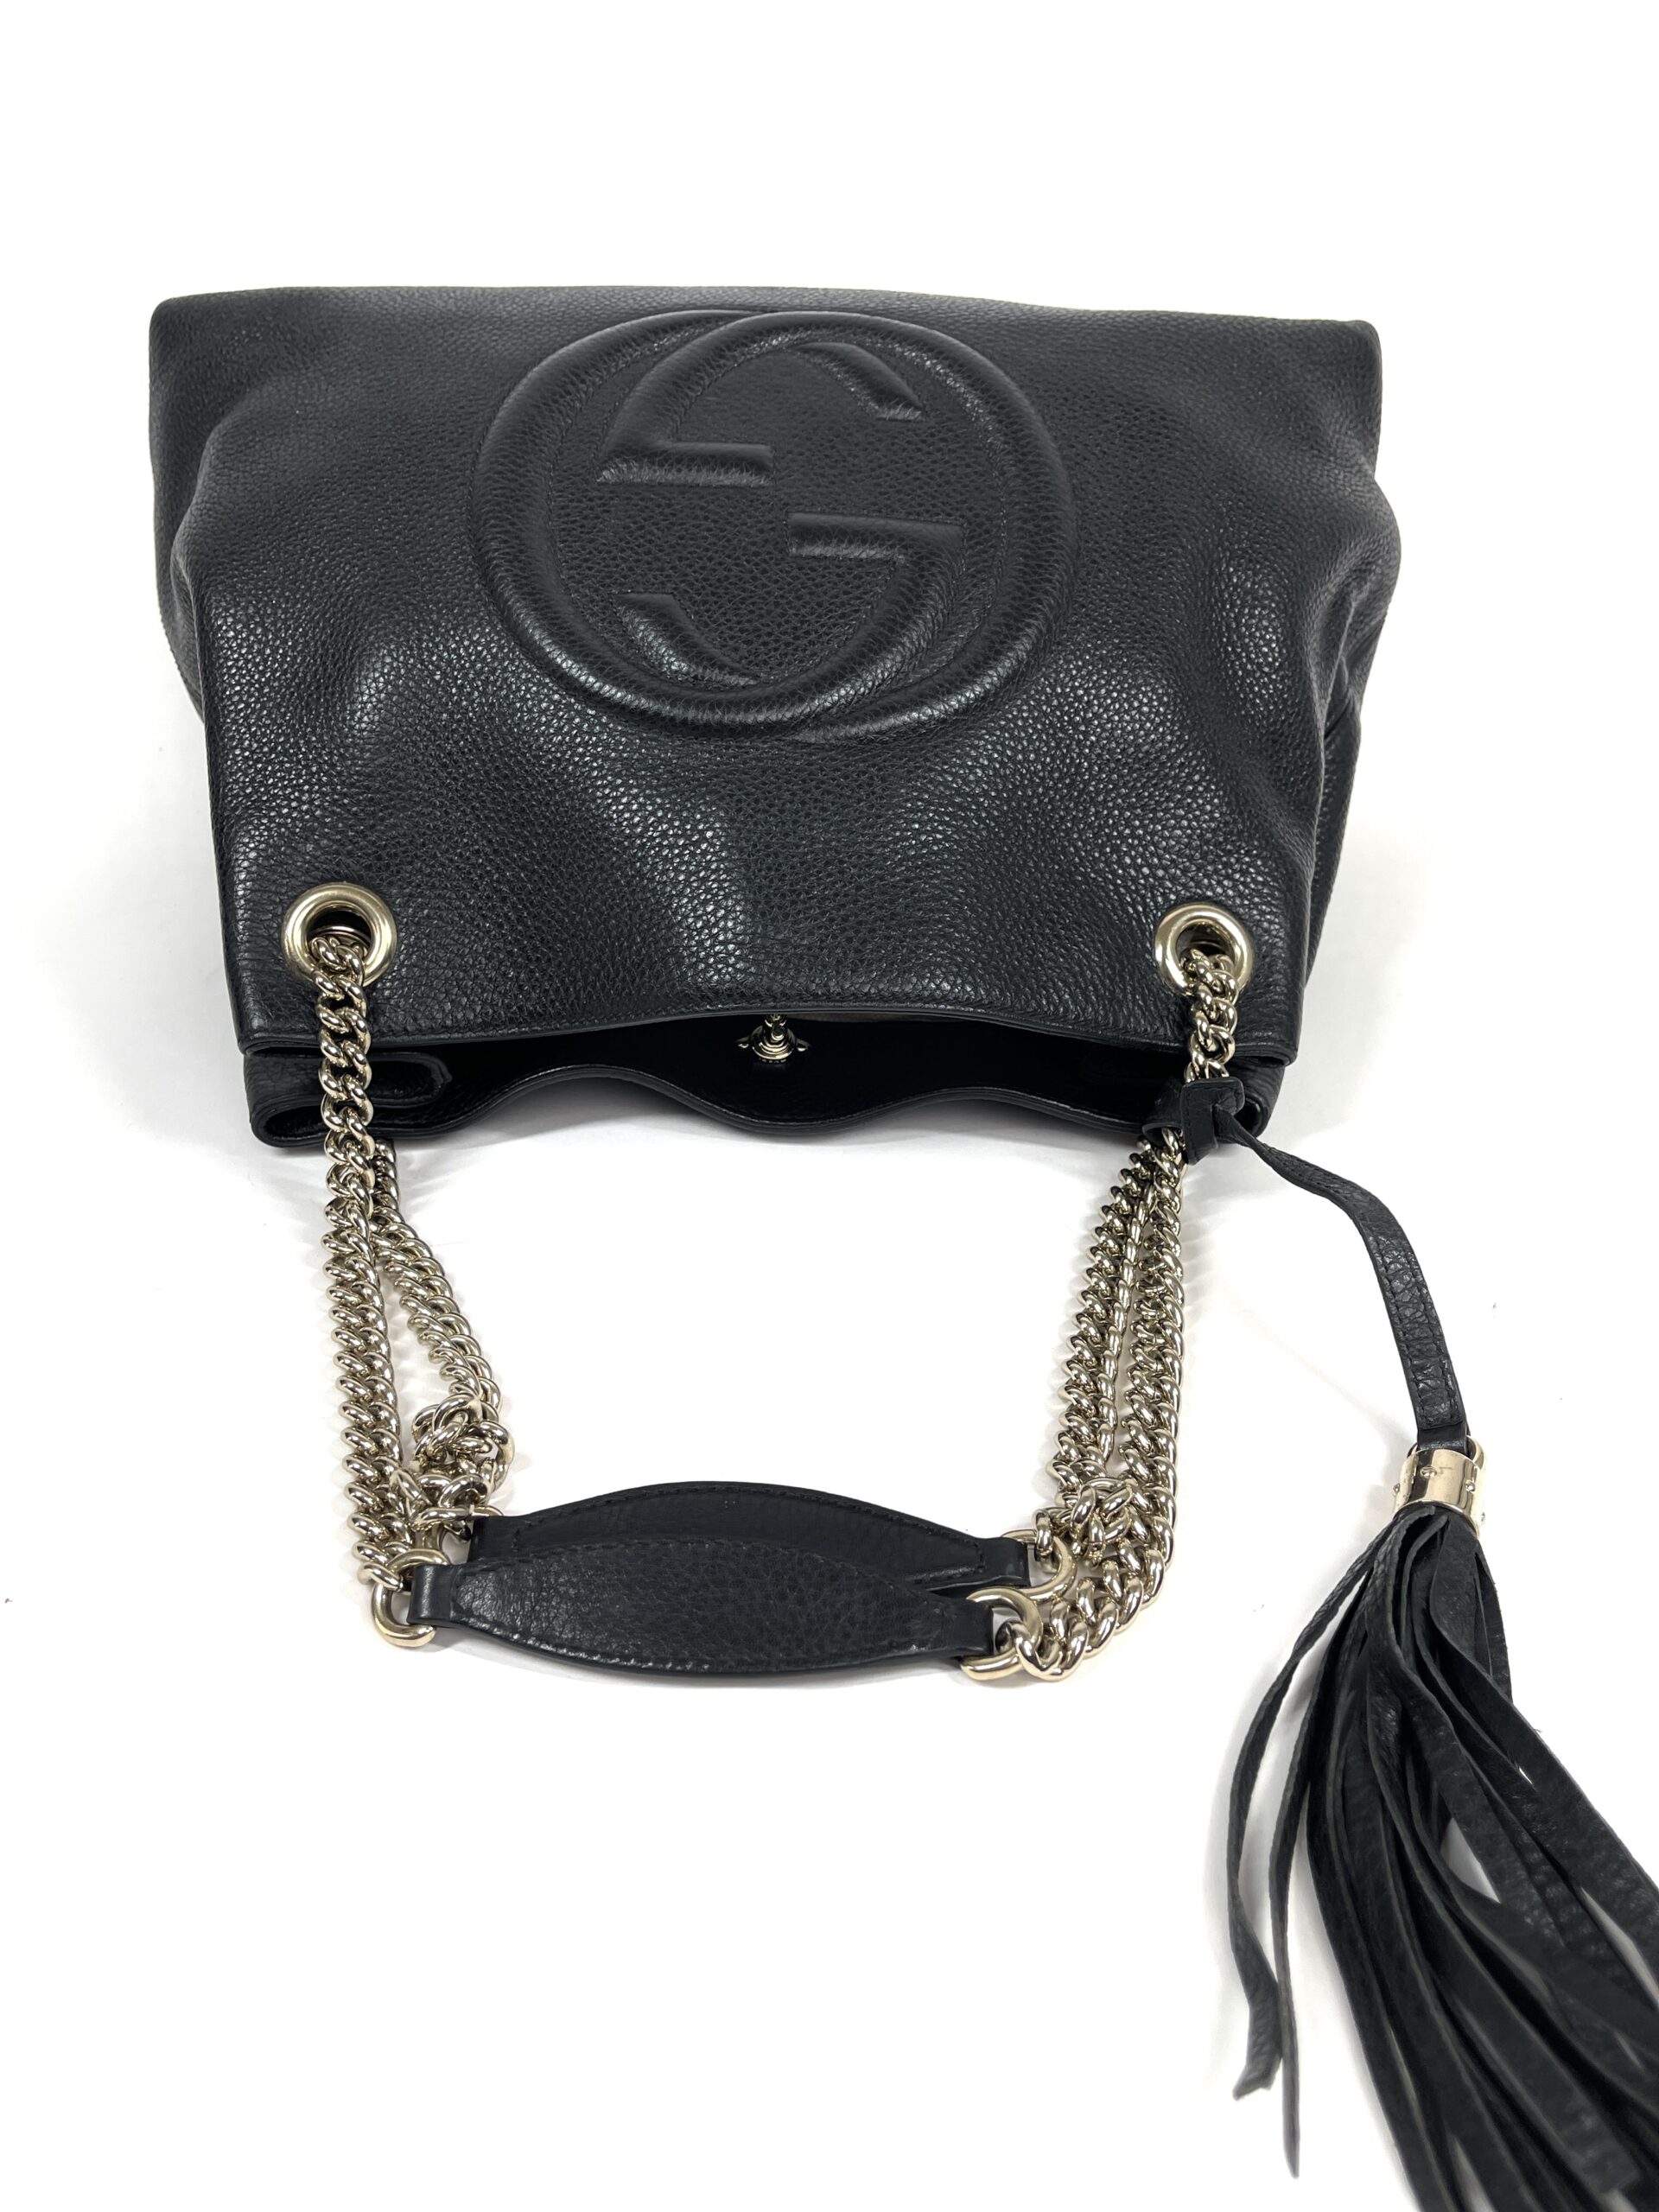 Gucci Soho Boston Handbag in Black Leather with Gold Tone Hardware